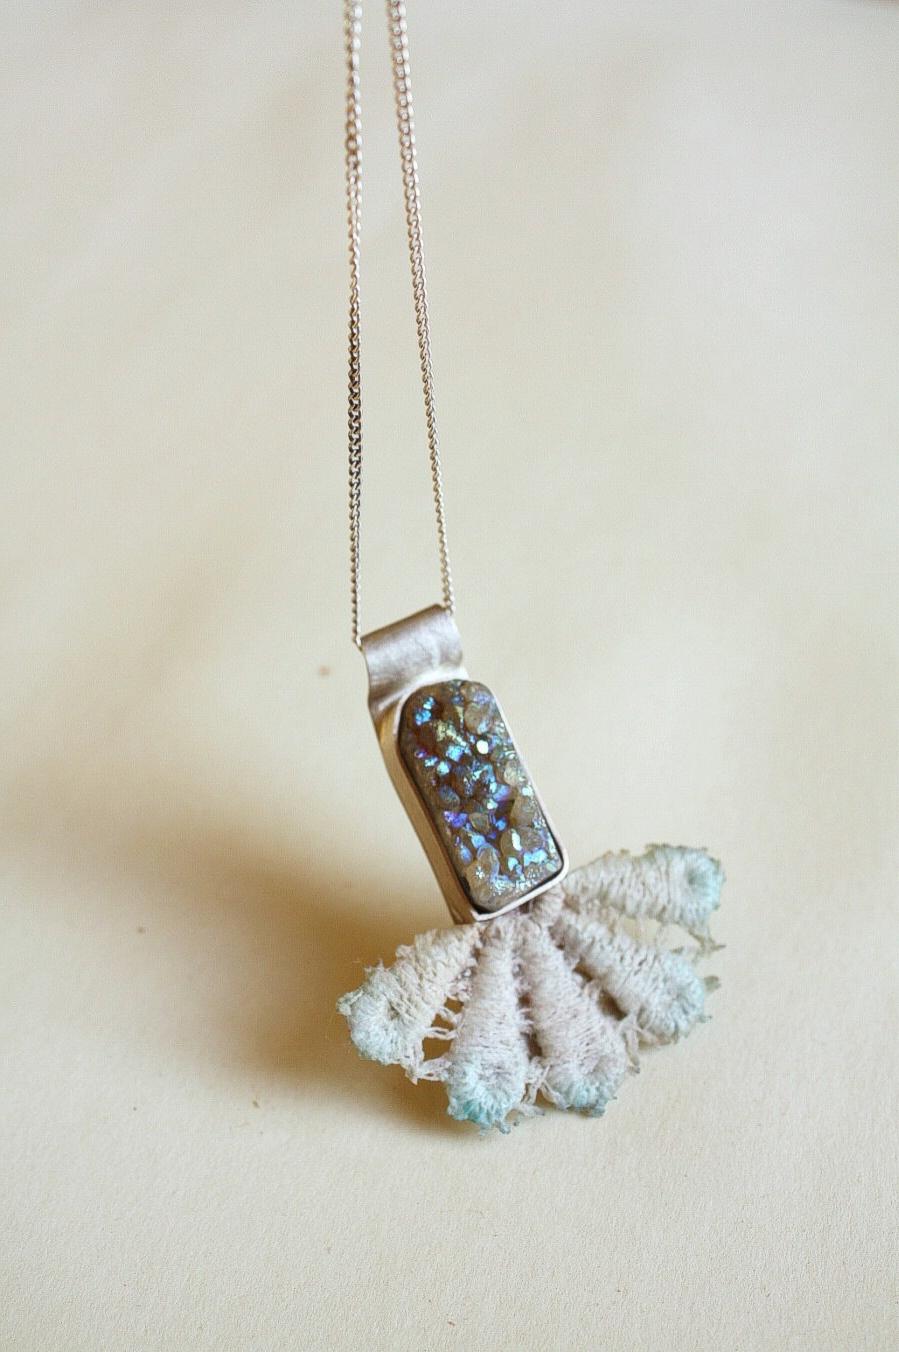 Vintage Lace Necklace sterling silver with druzy quartz stone light blue